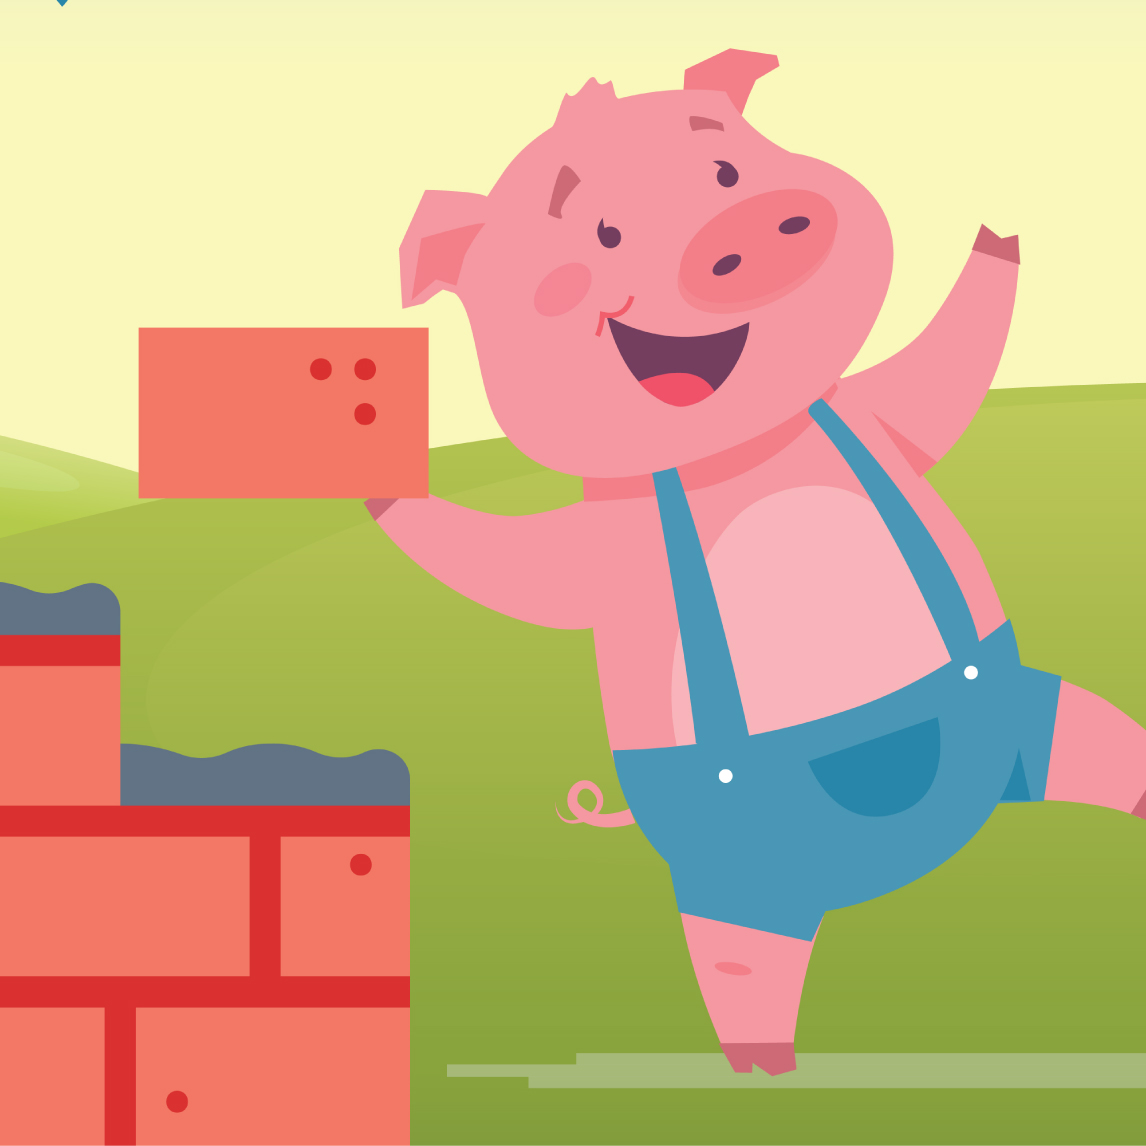 Little pig holding brick - image